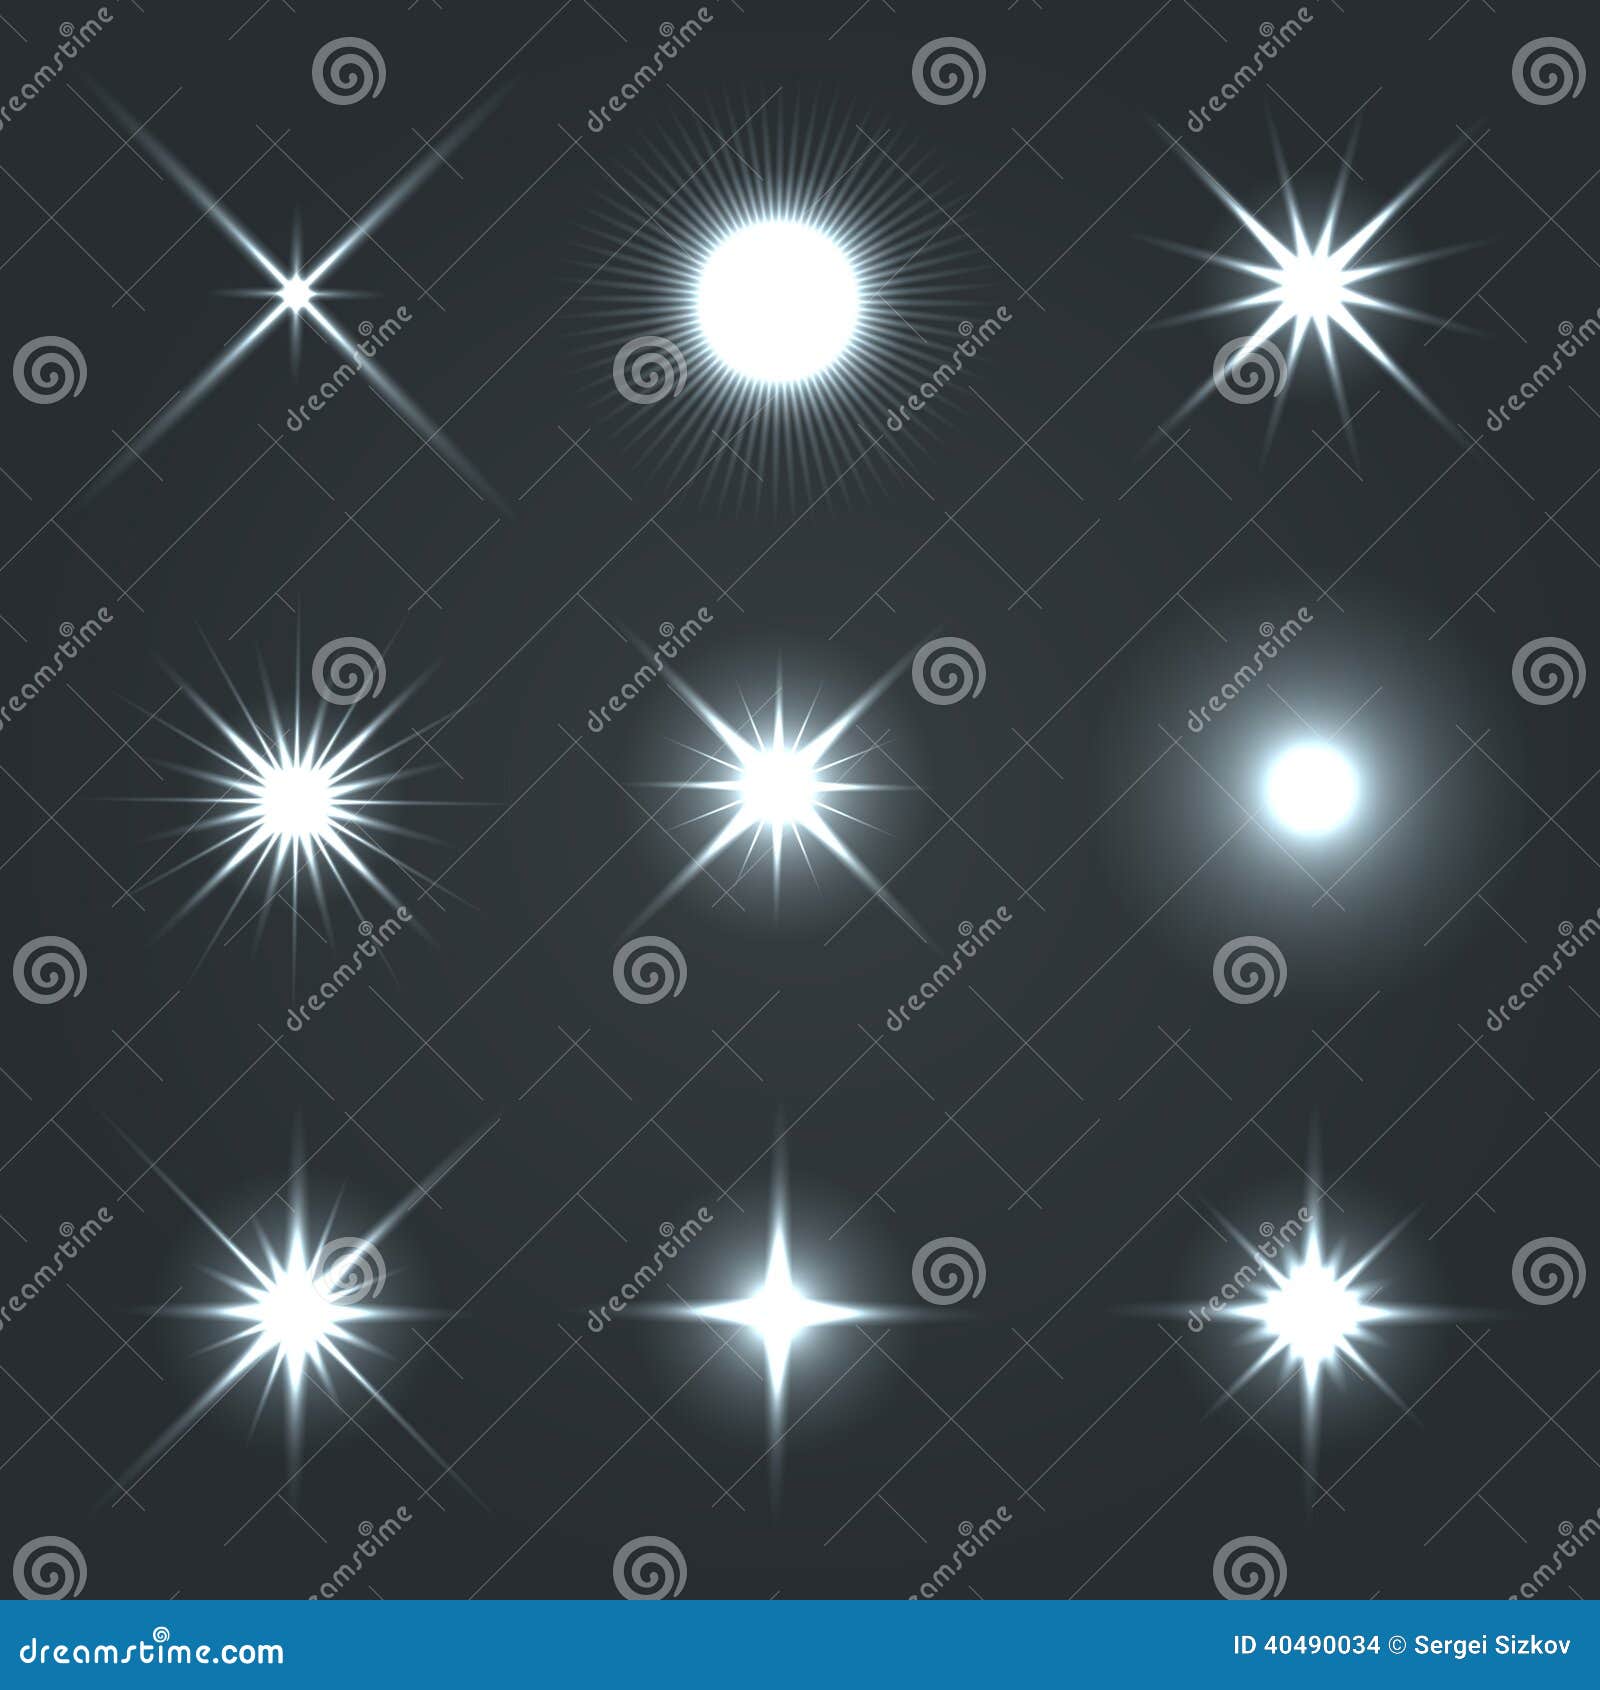 light glow flare stars effect set.